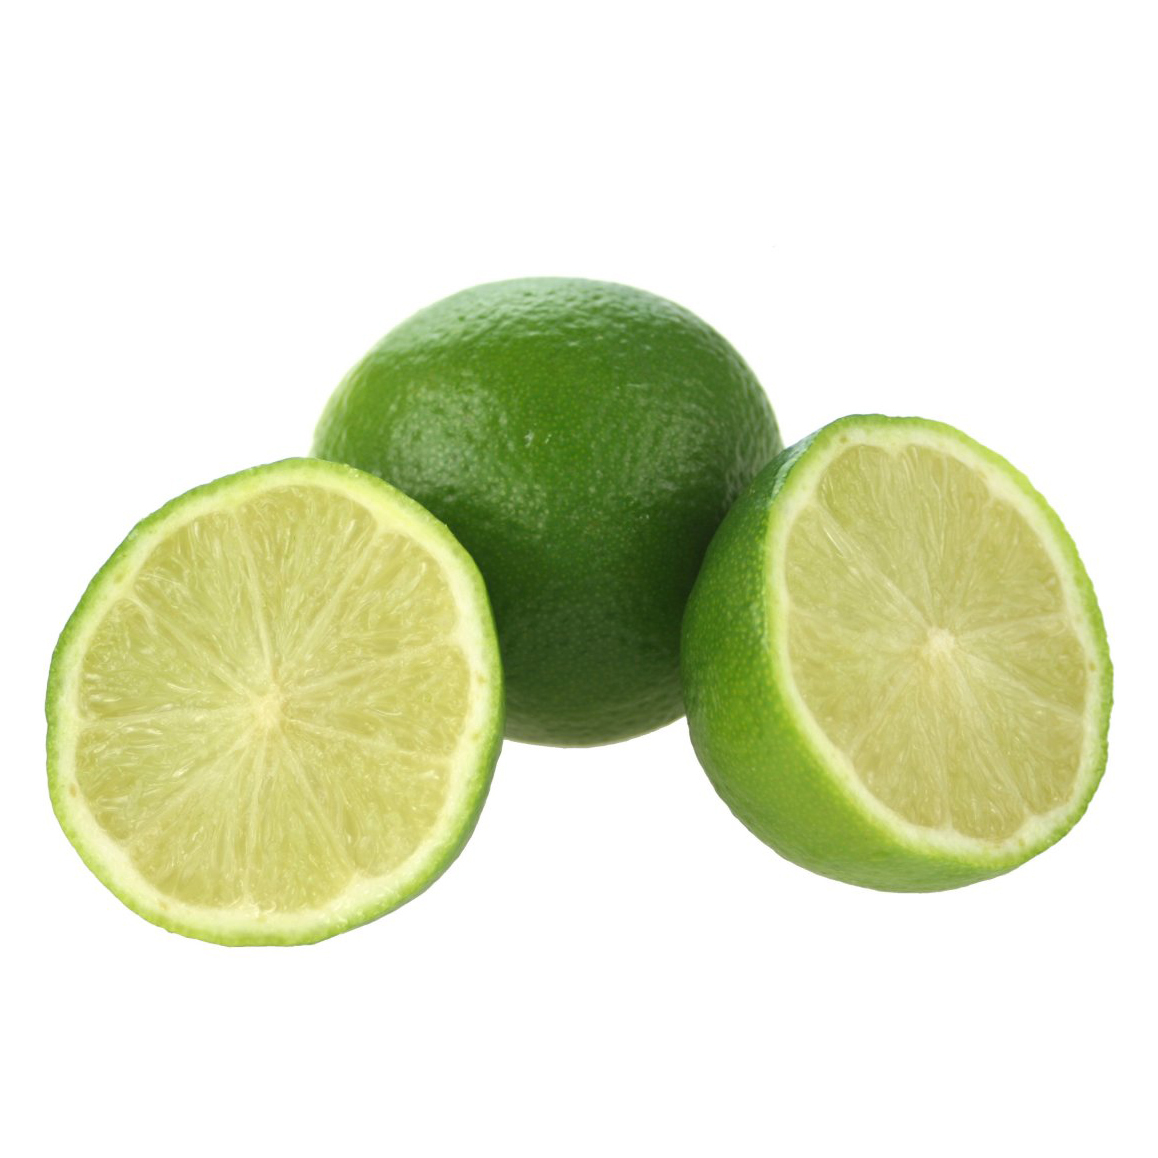 Organic Limes 300g - AUS*